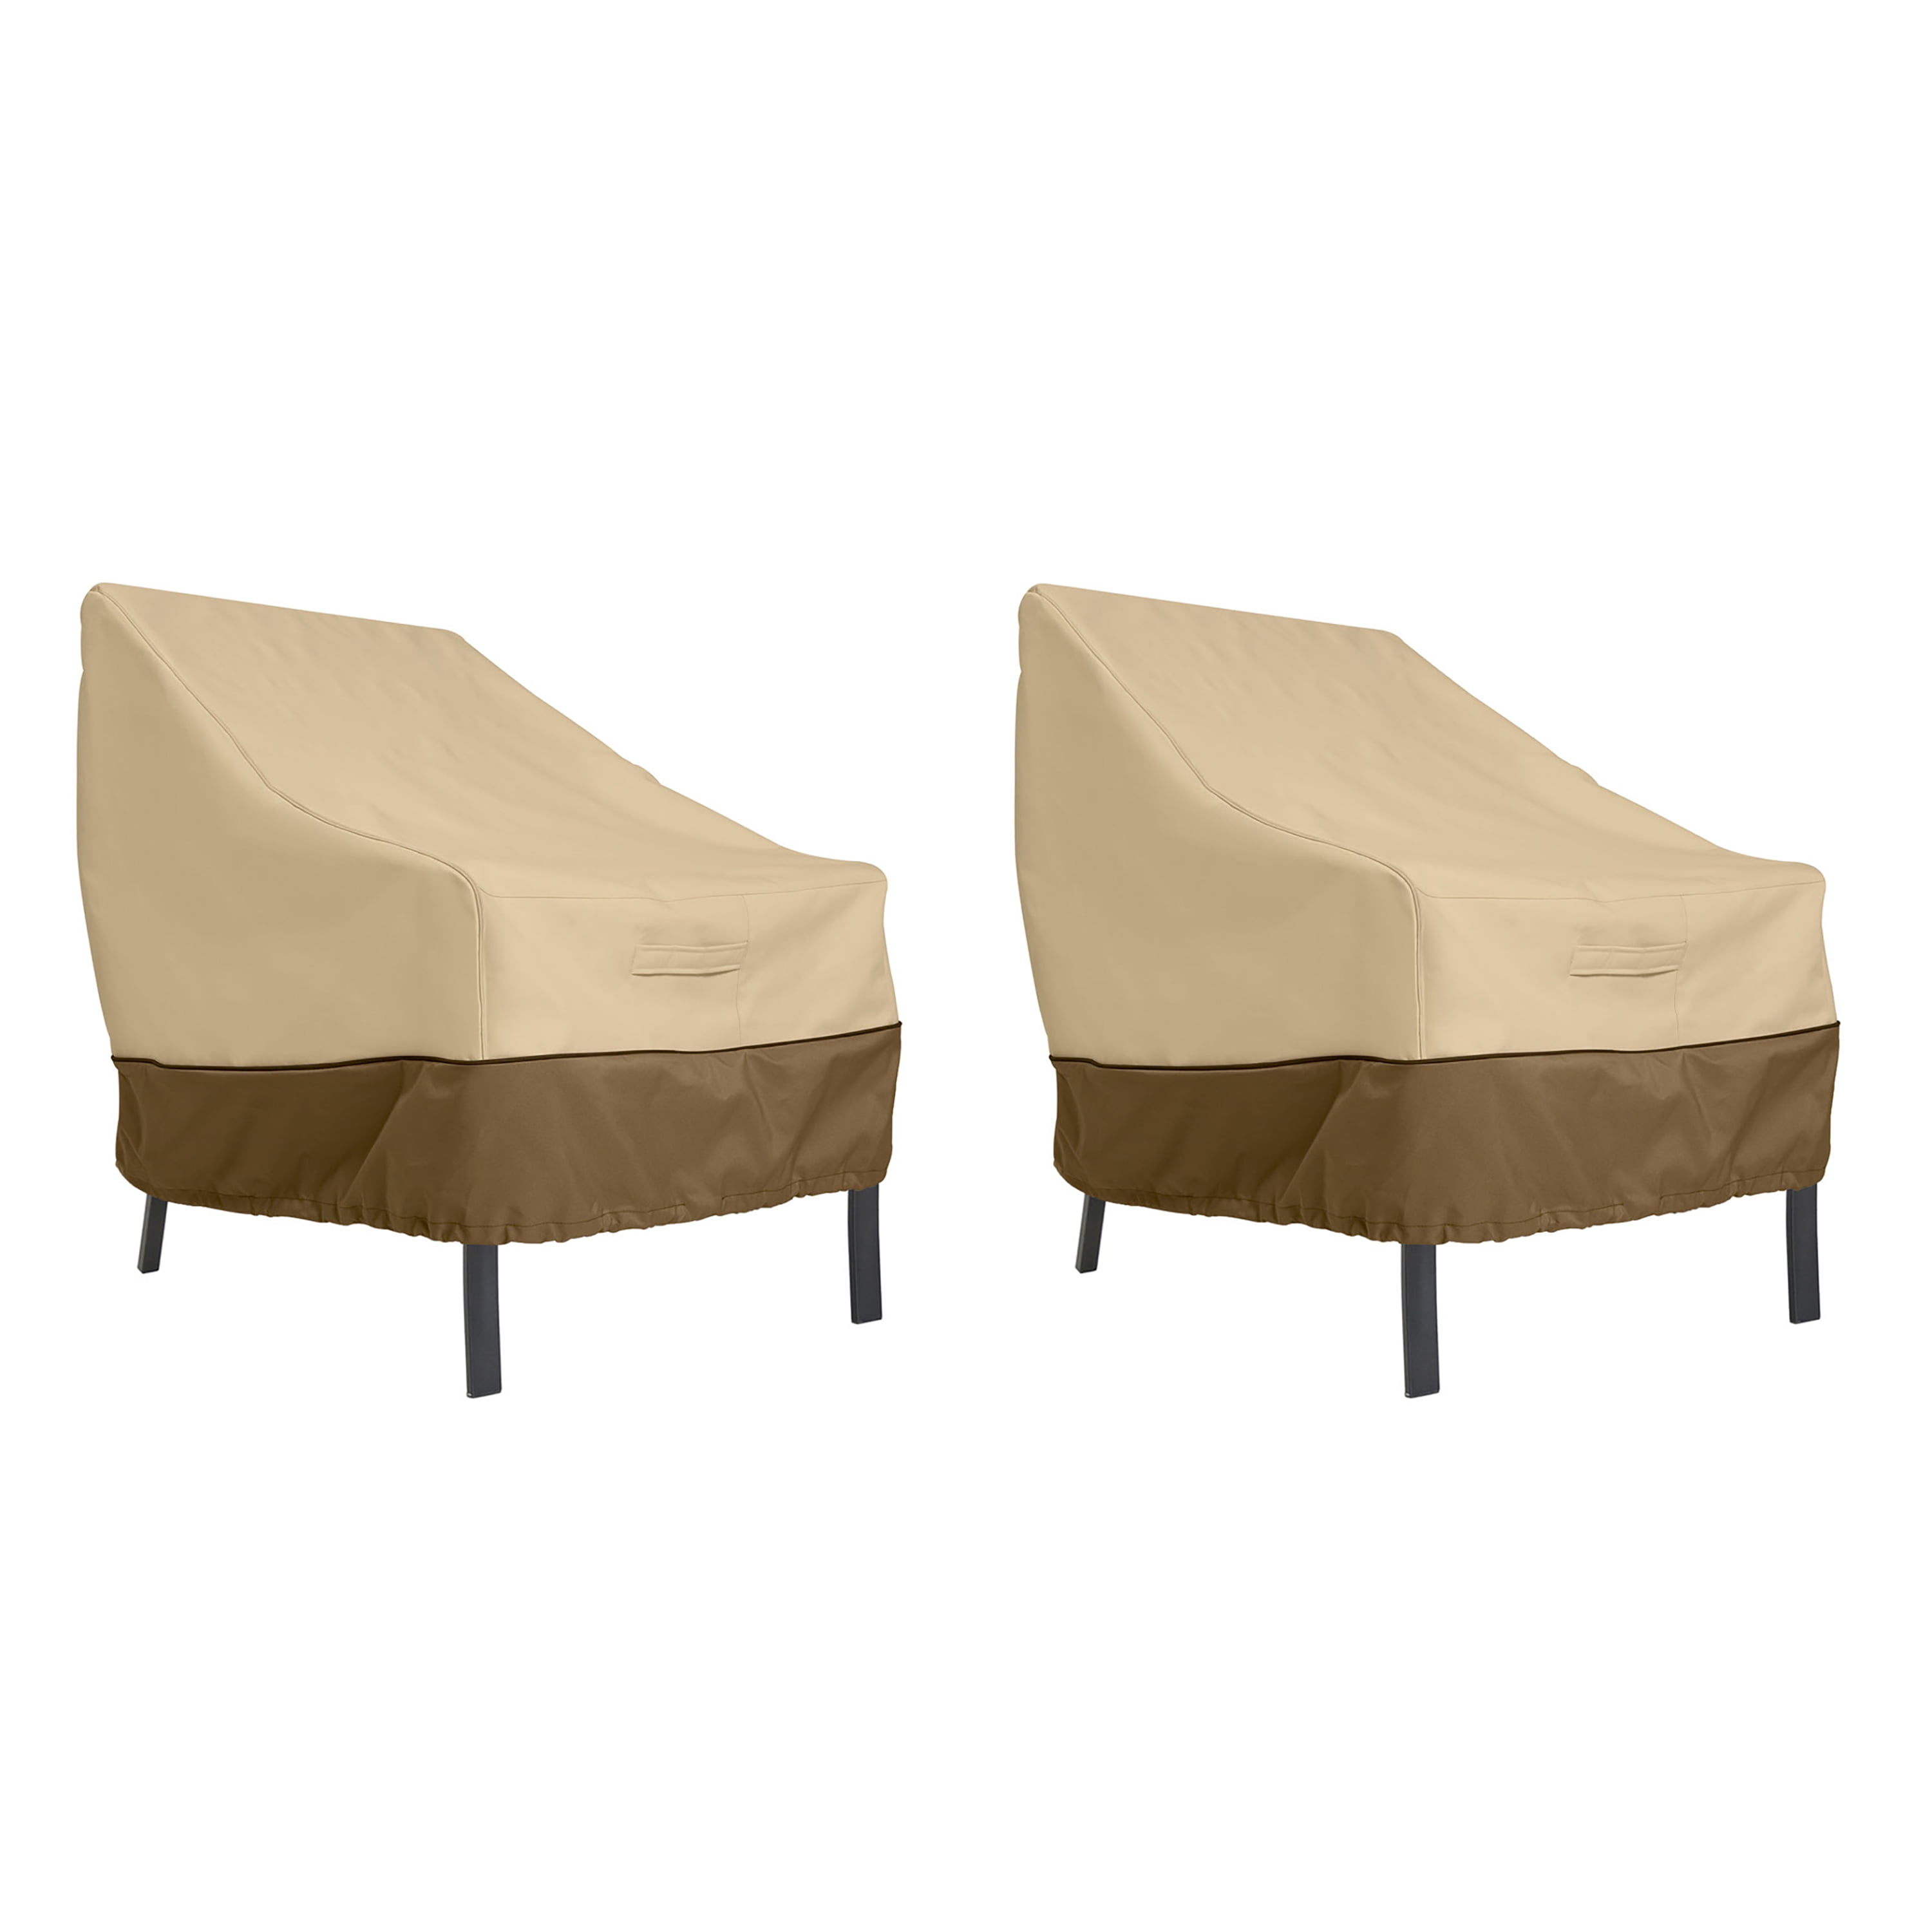 Classic Accessories Veranda Water-Resistant 25.5 Inch Patio Chair Cover 78912 